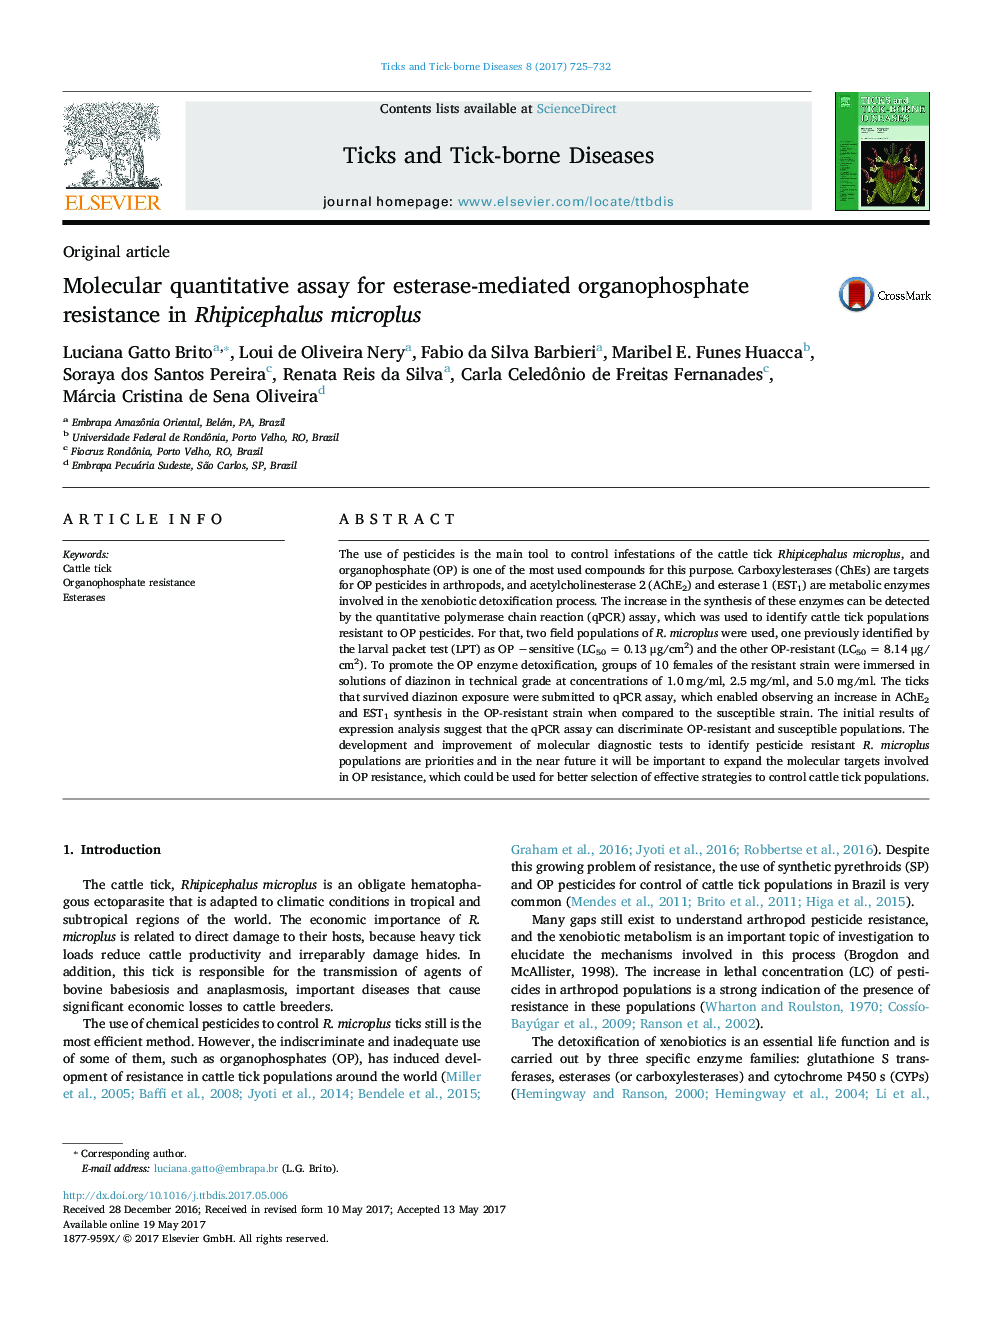 Molecular quantitative assay for esterase-mediated organophosphate resistance in Rhipicephalus microplus